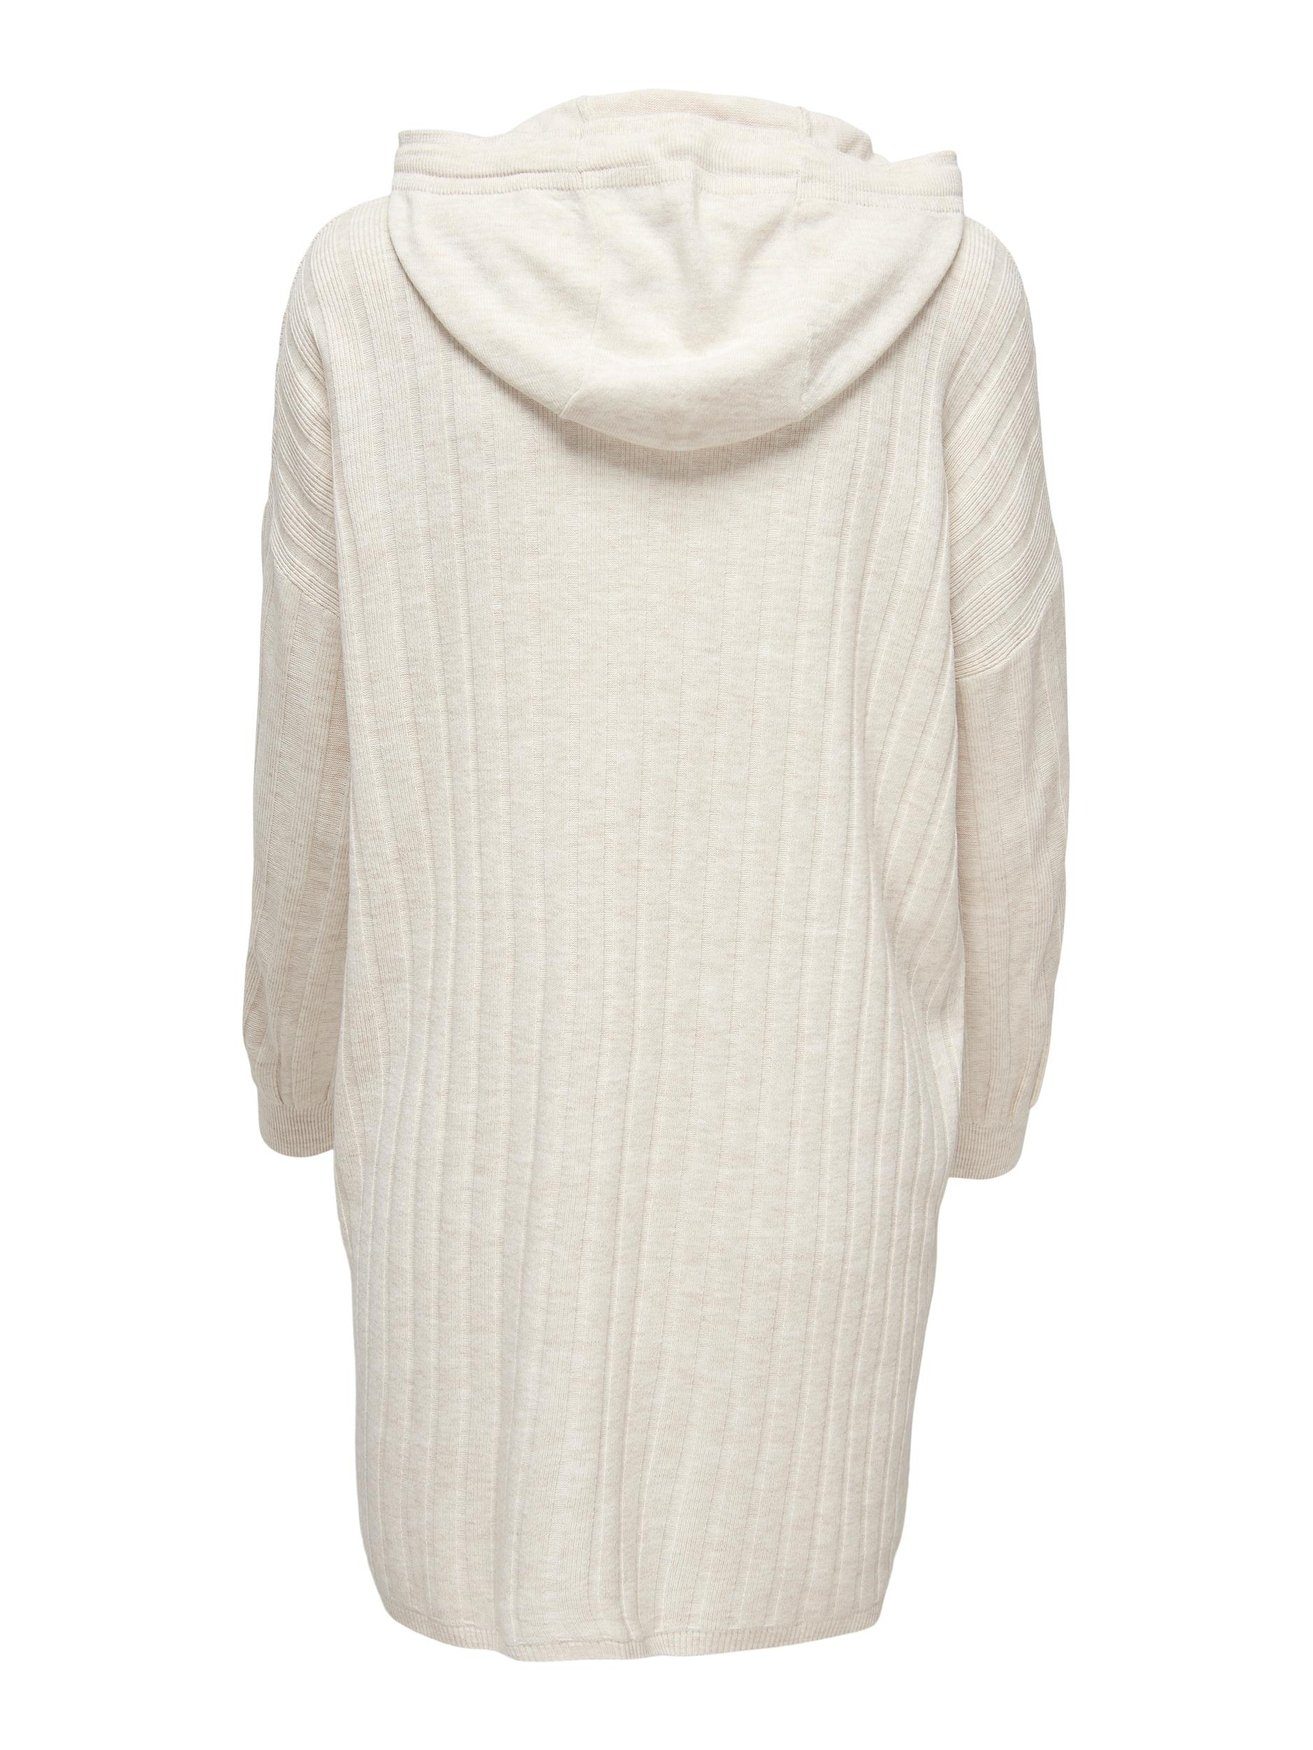 Beige (20) offwhite ONLTESSA 6157 in Dress Mini Hoodie ONLY Shirtkleid (lang) Kleid Strick Pullover